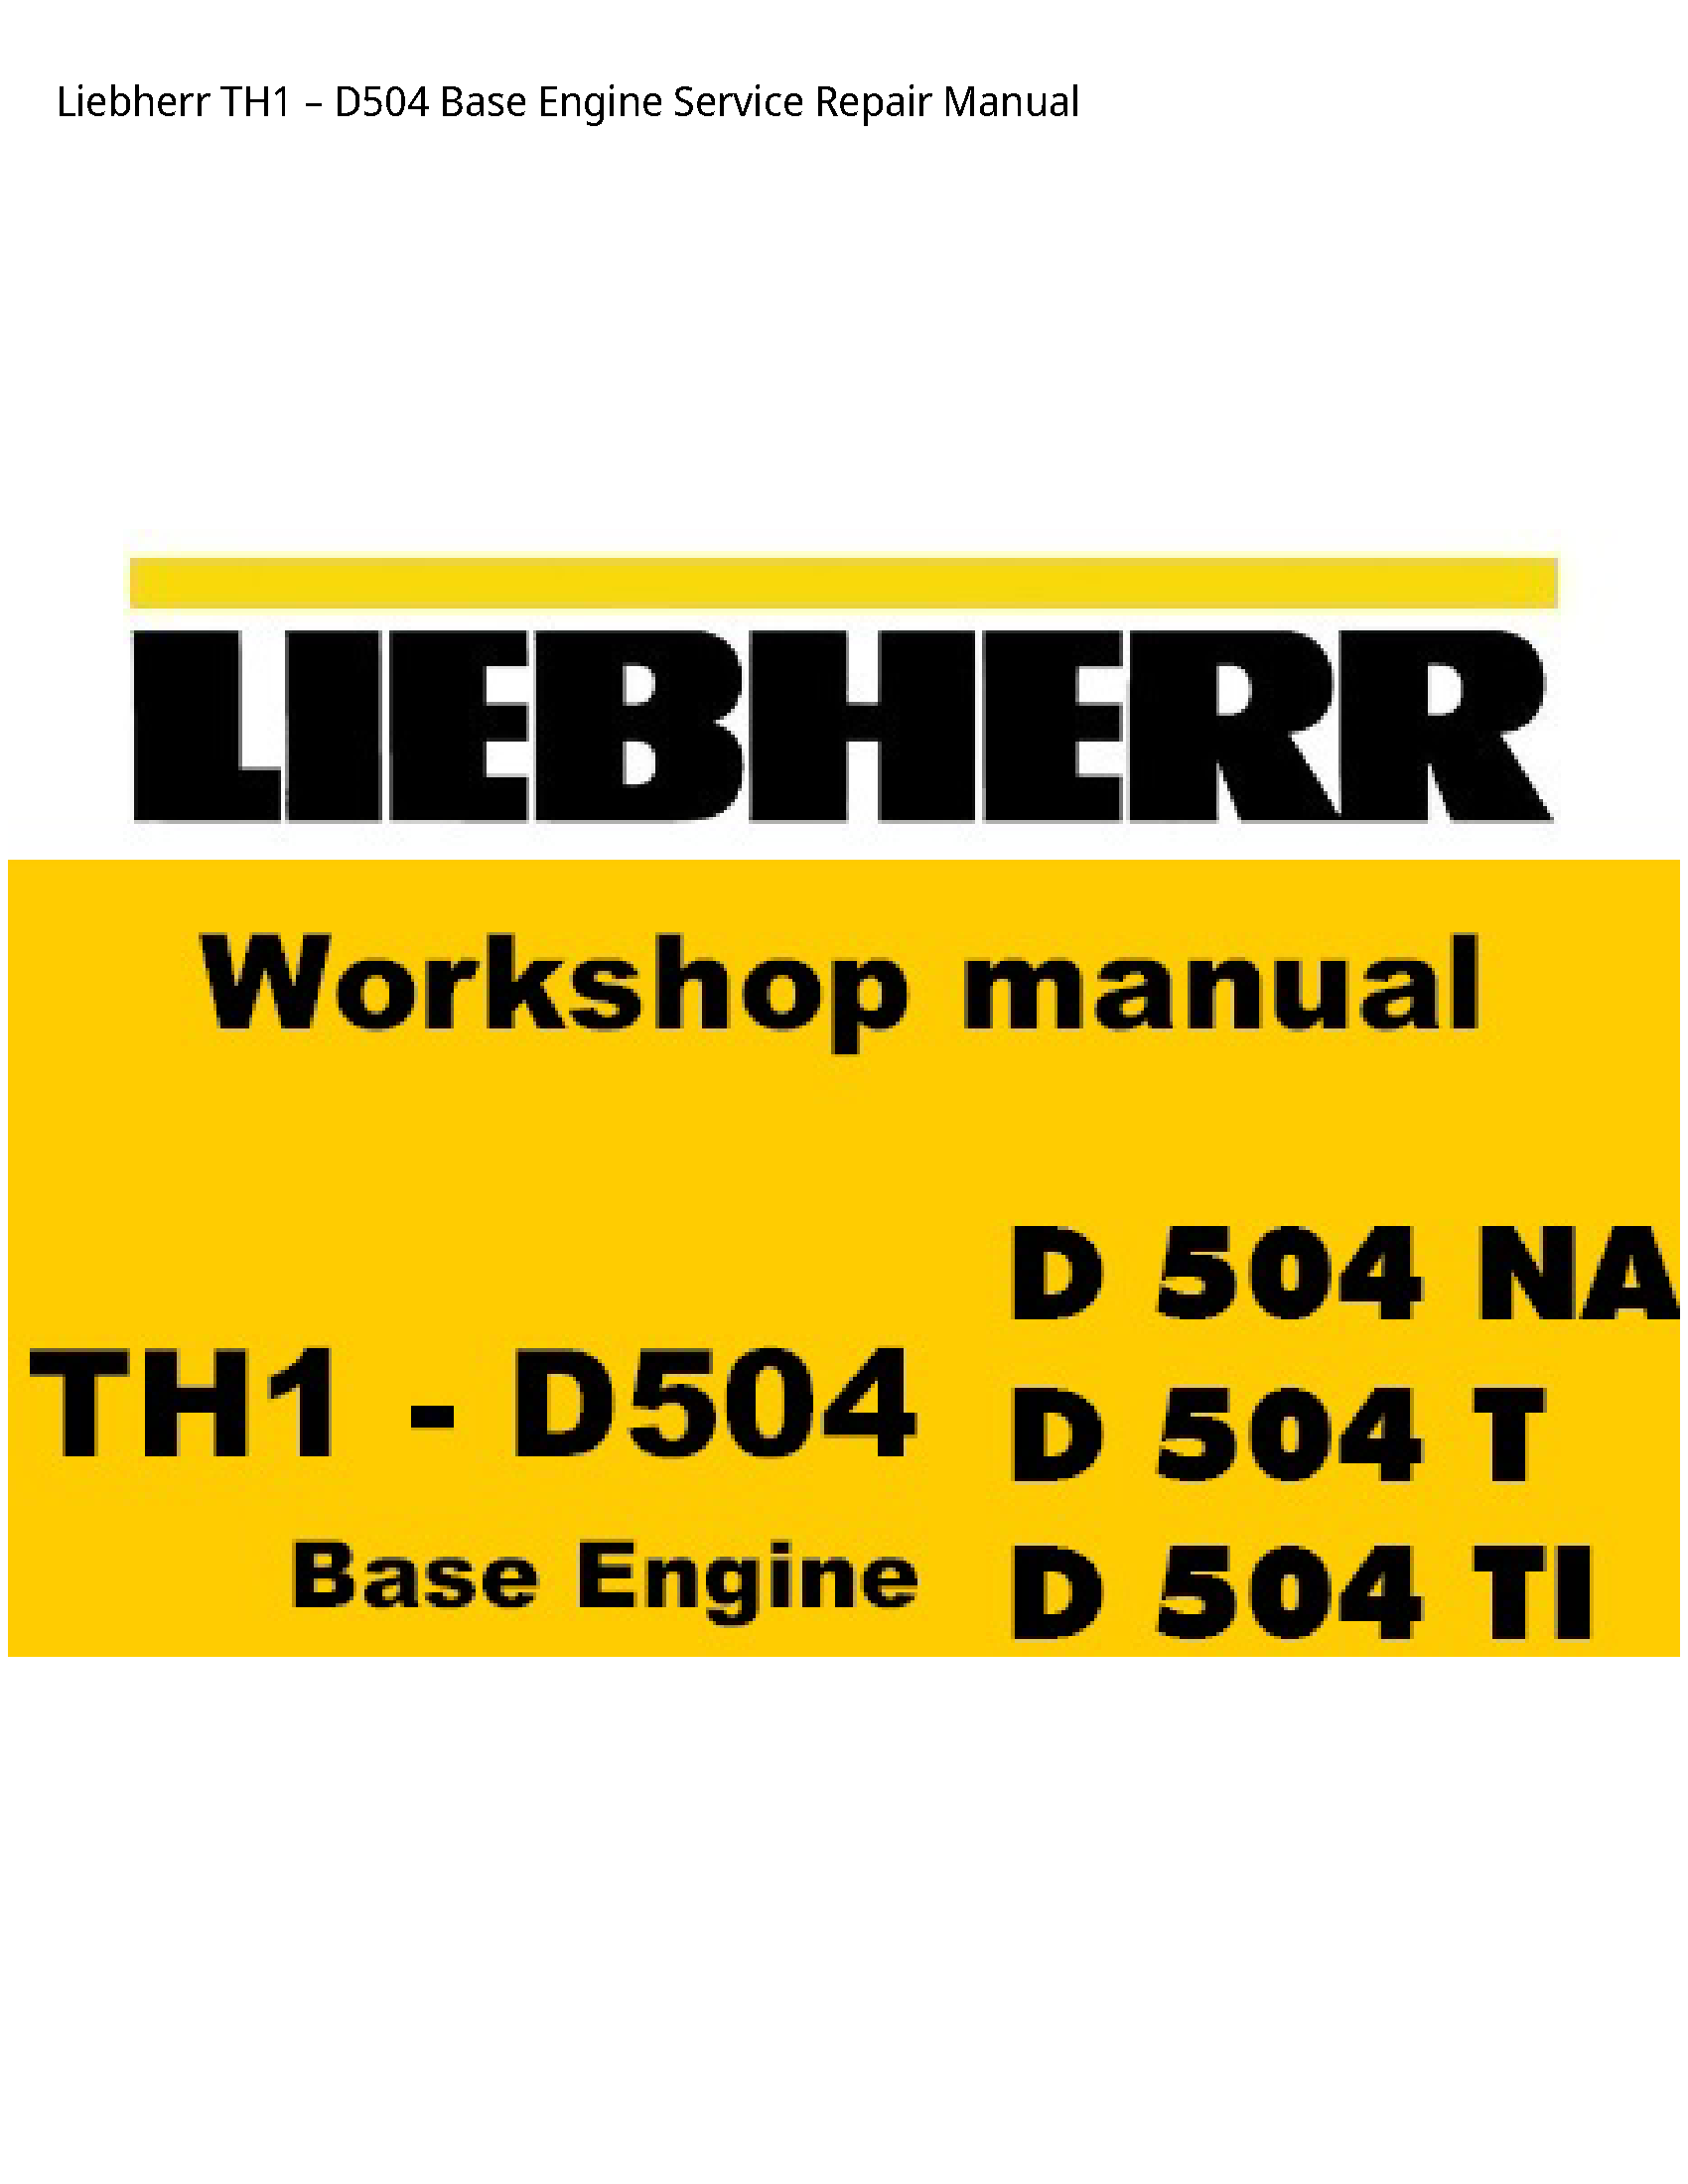 Liebherr TH1 Base Engine manual